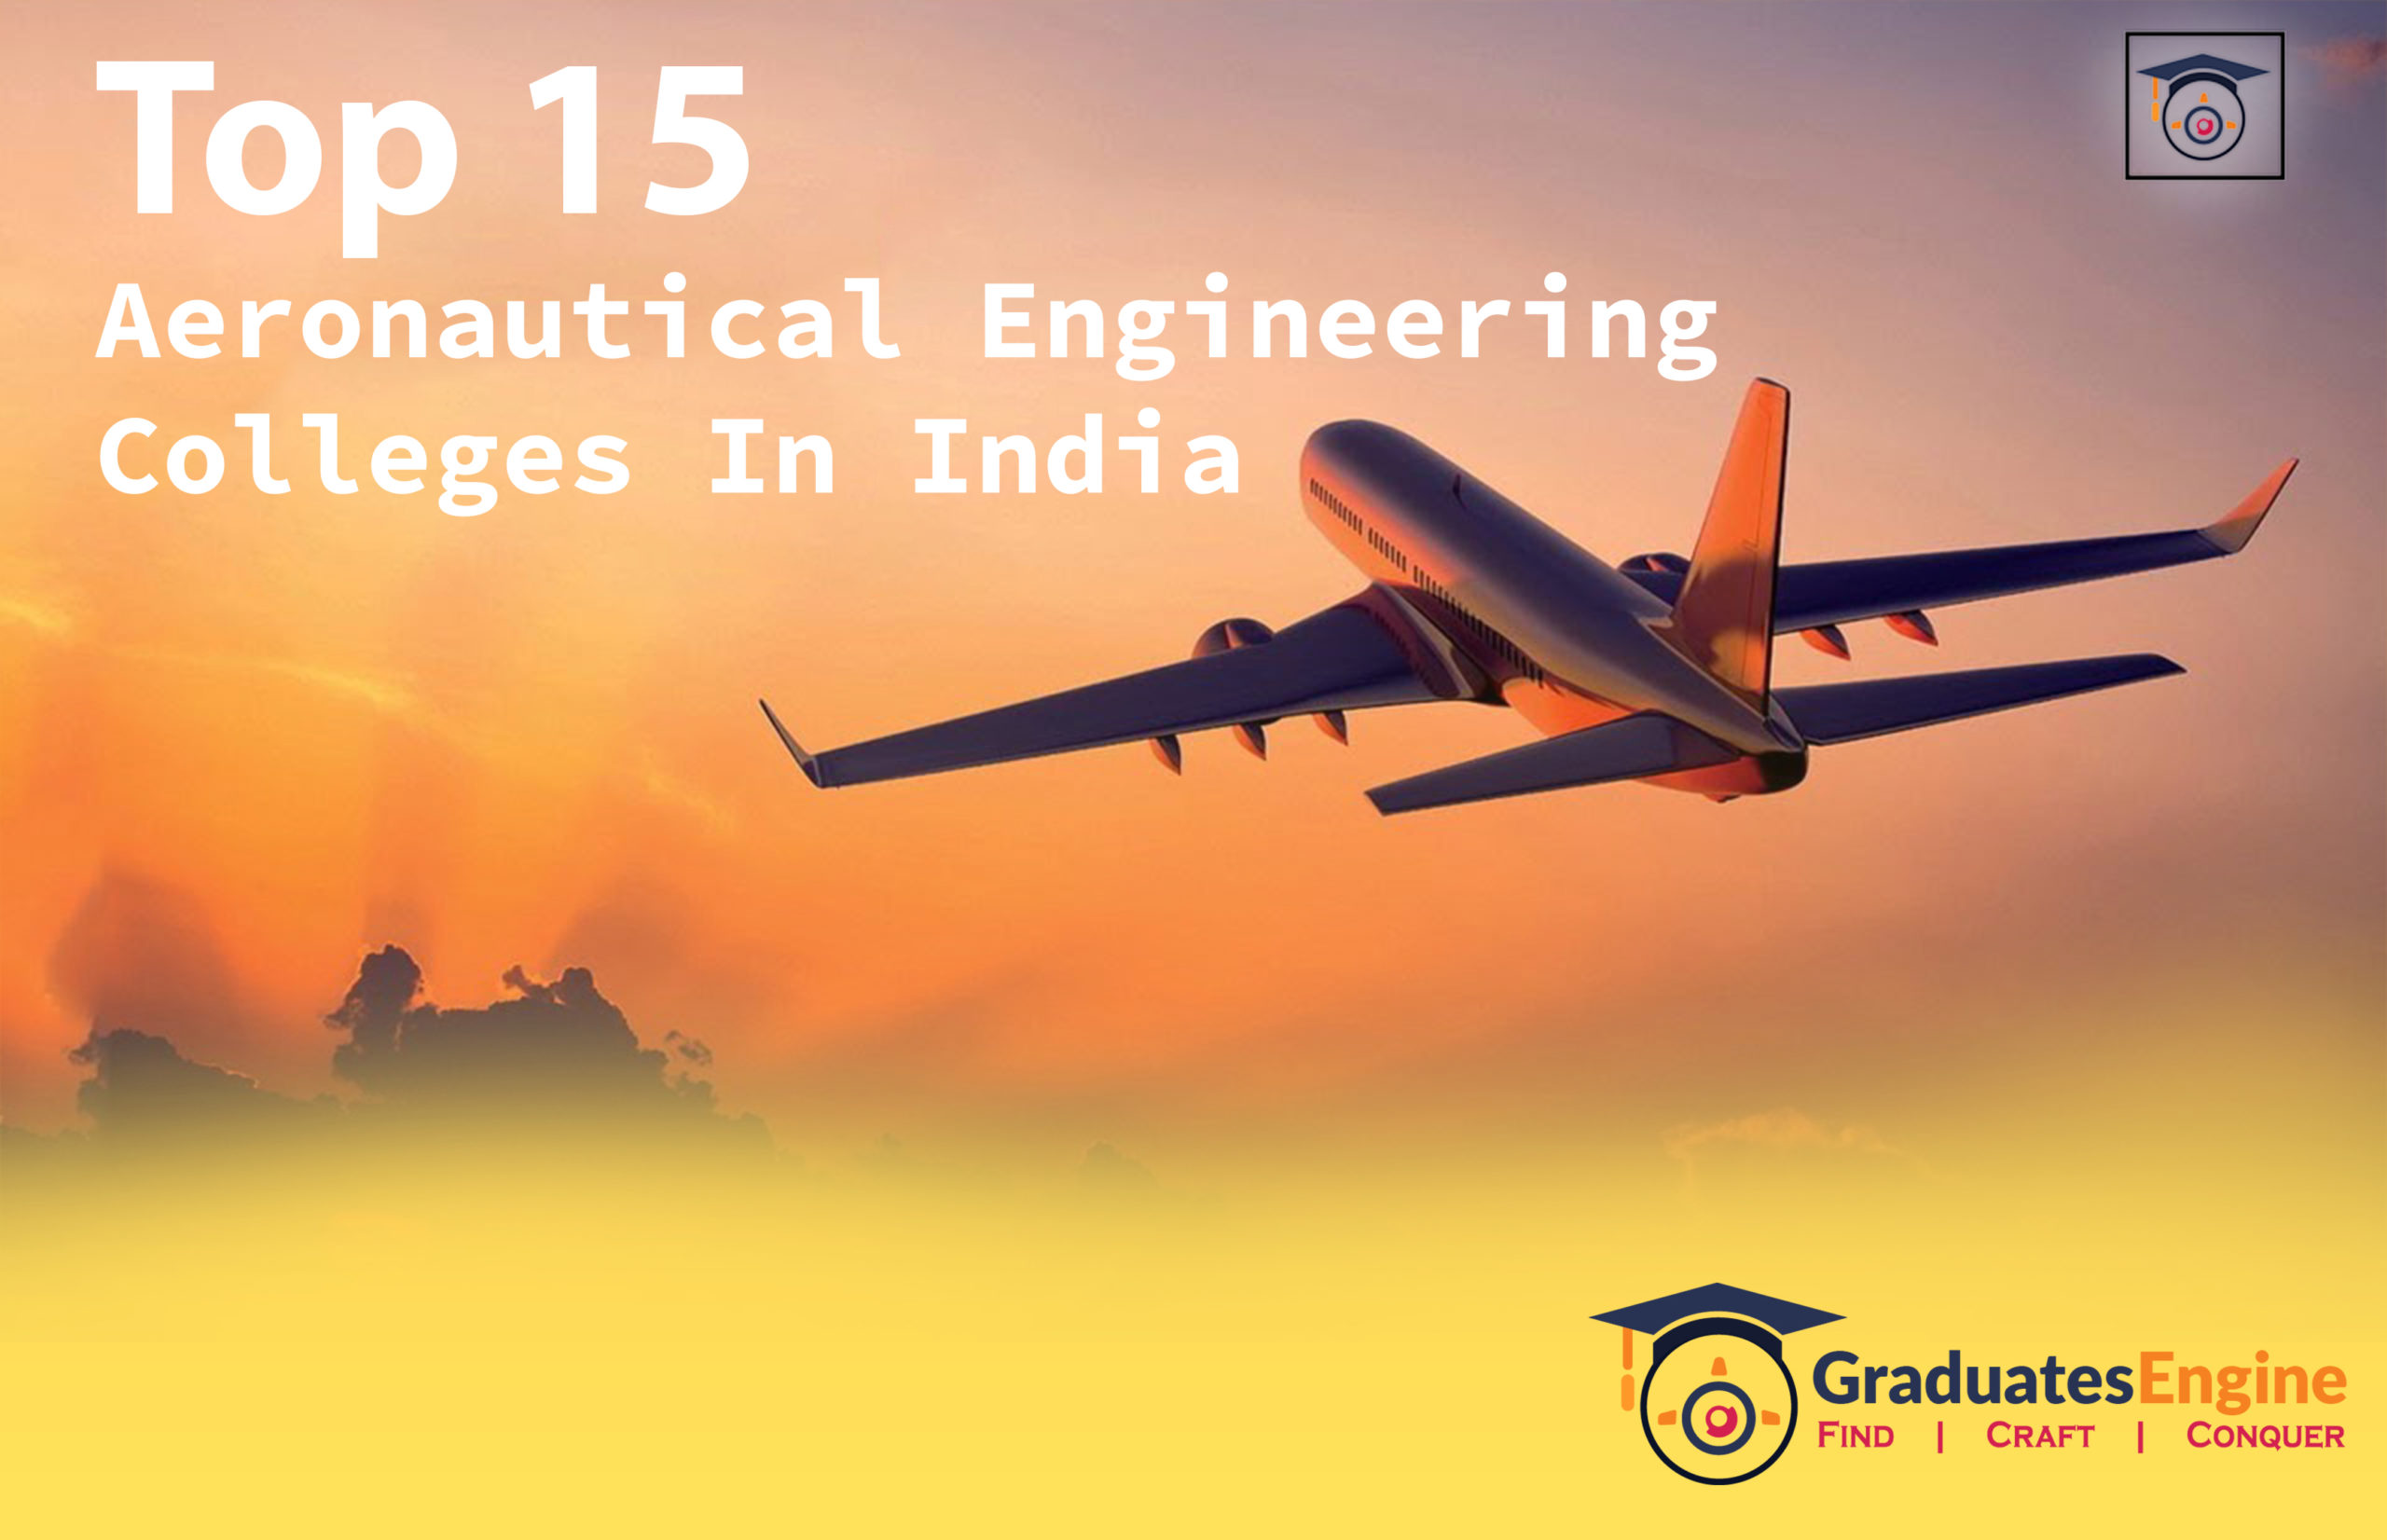 Top 15 aeronautical engineering colleges in India